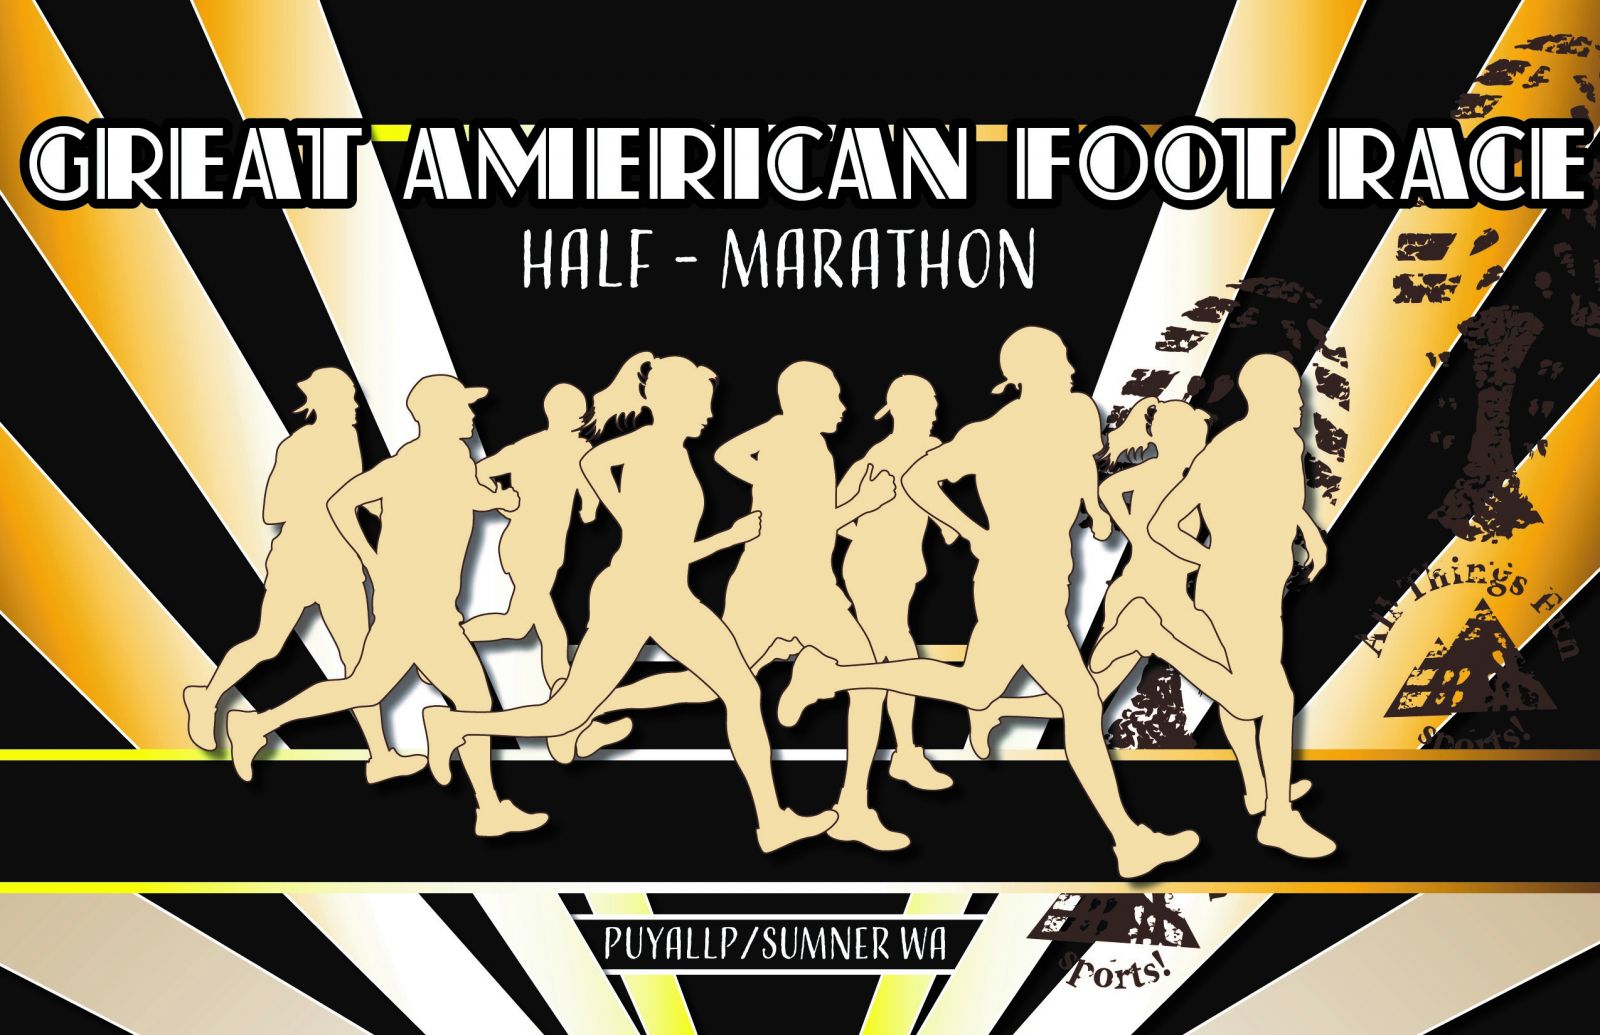 Great American Foot Race Half Marathon logo on RaceRaves